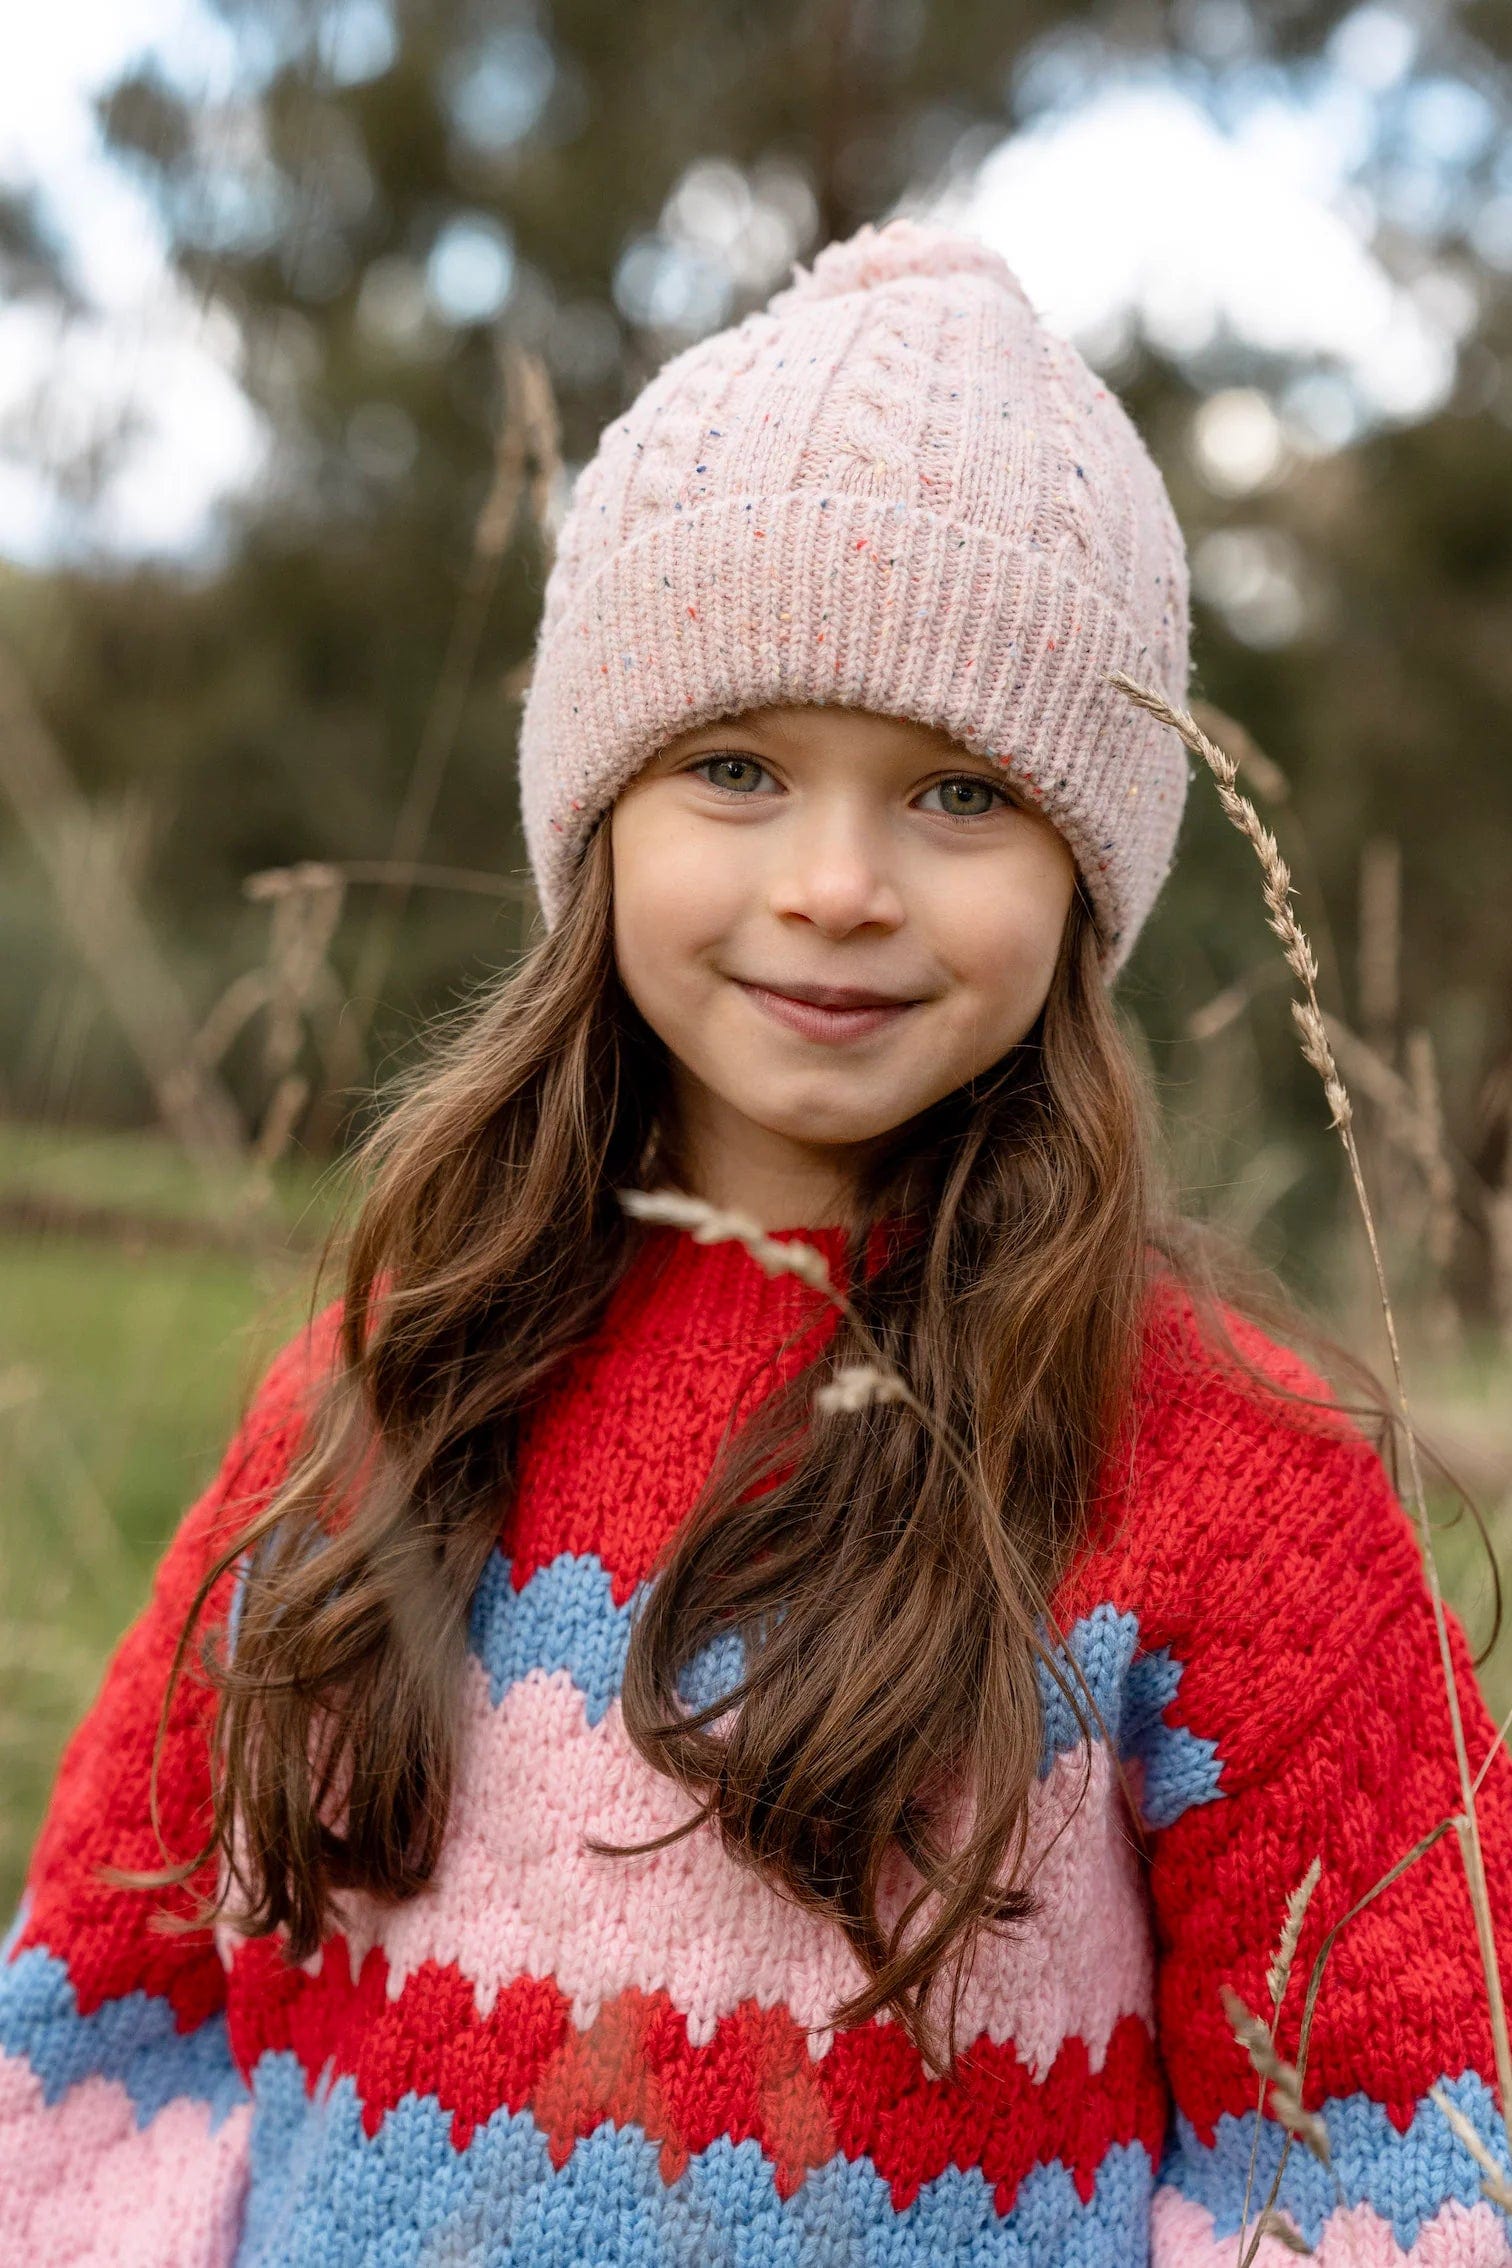 Acorn Kids Accessories Hats Alps Beanie Pink